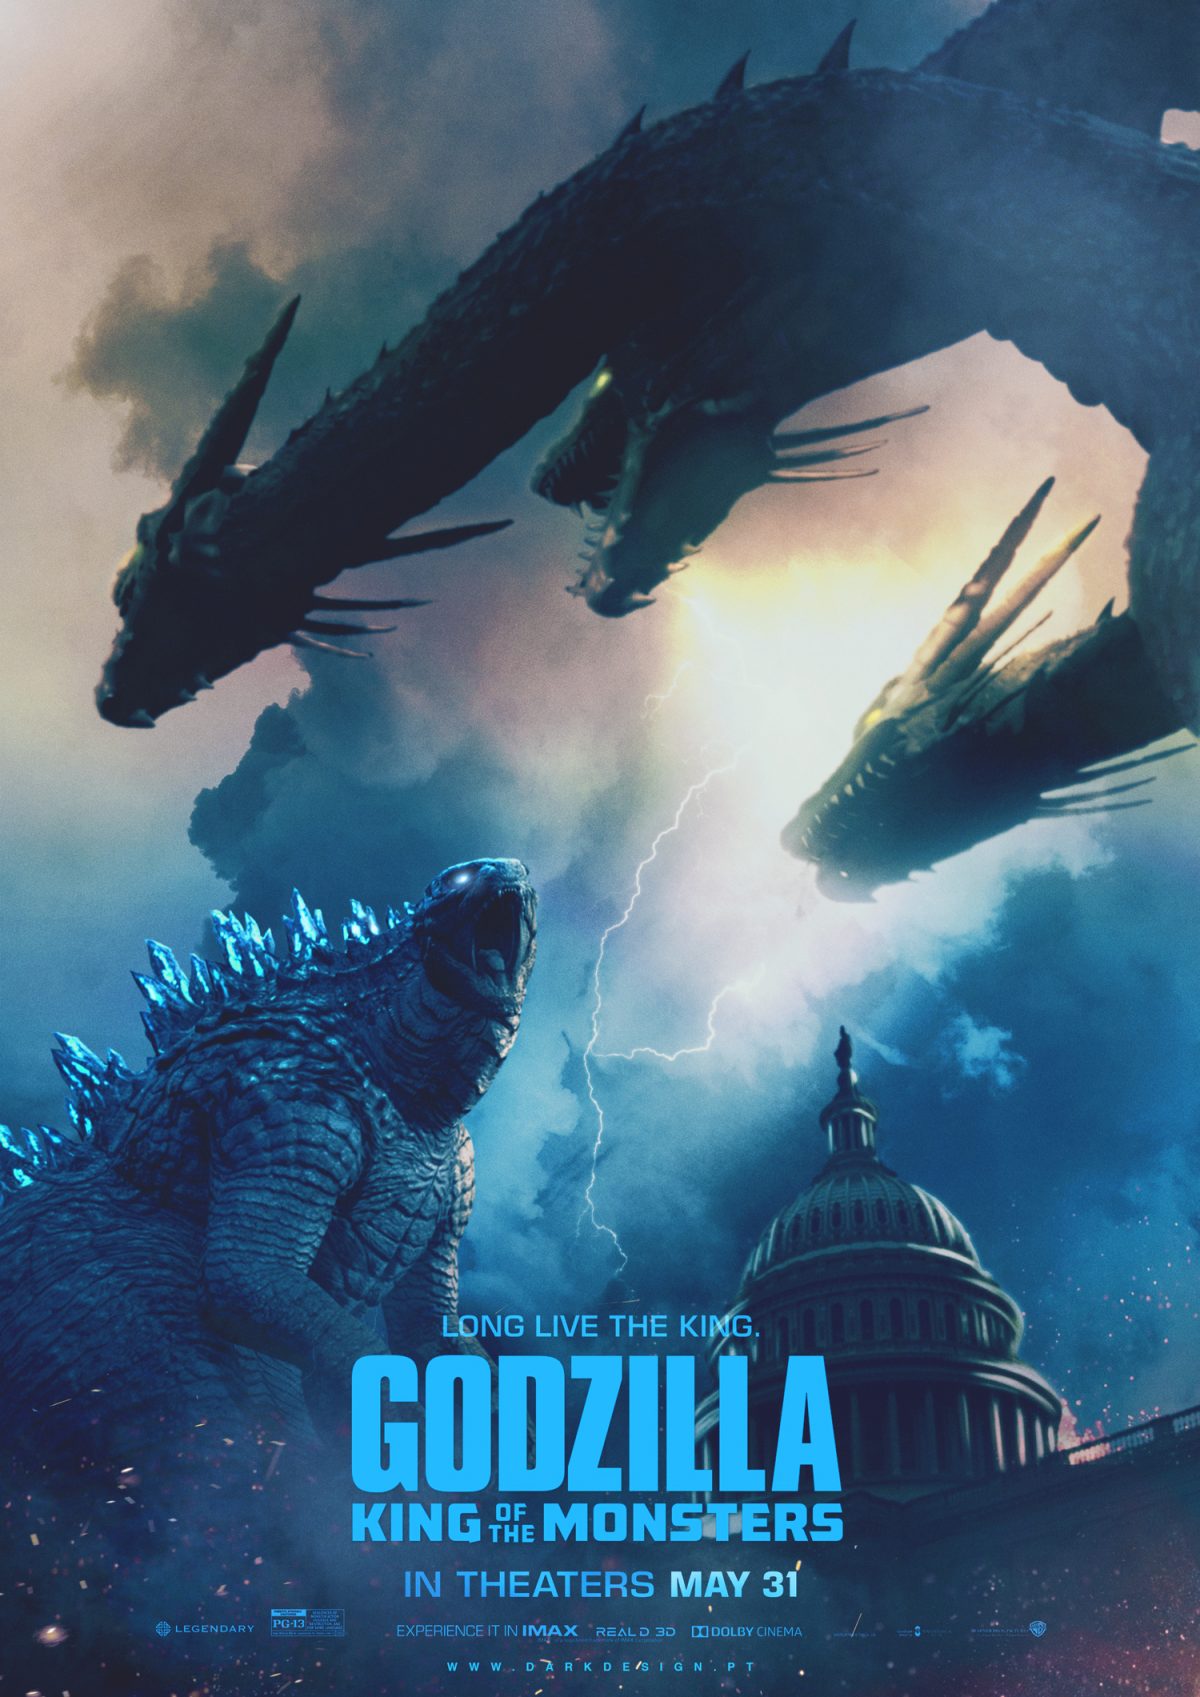 Godzilla 2019 Drawing : Godzilla 2014 Sketch By Avgk04 On Deviantart ...